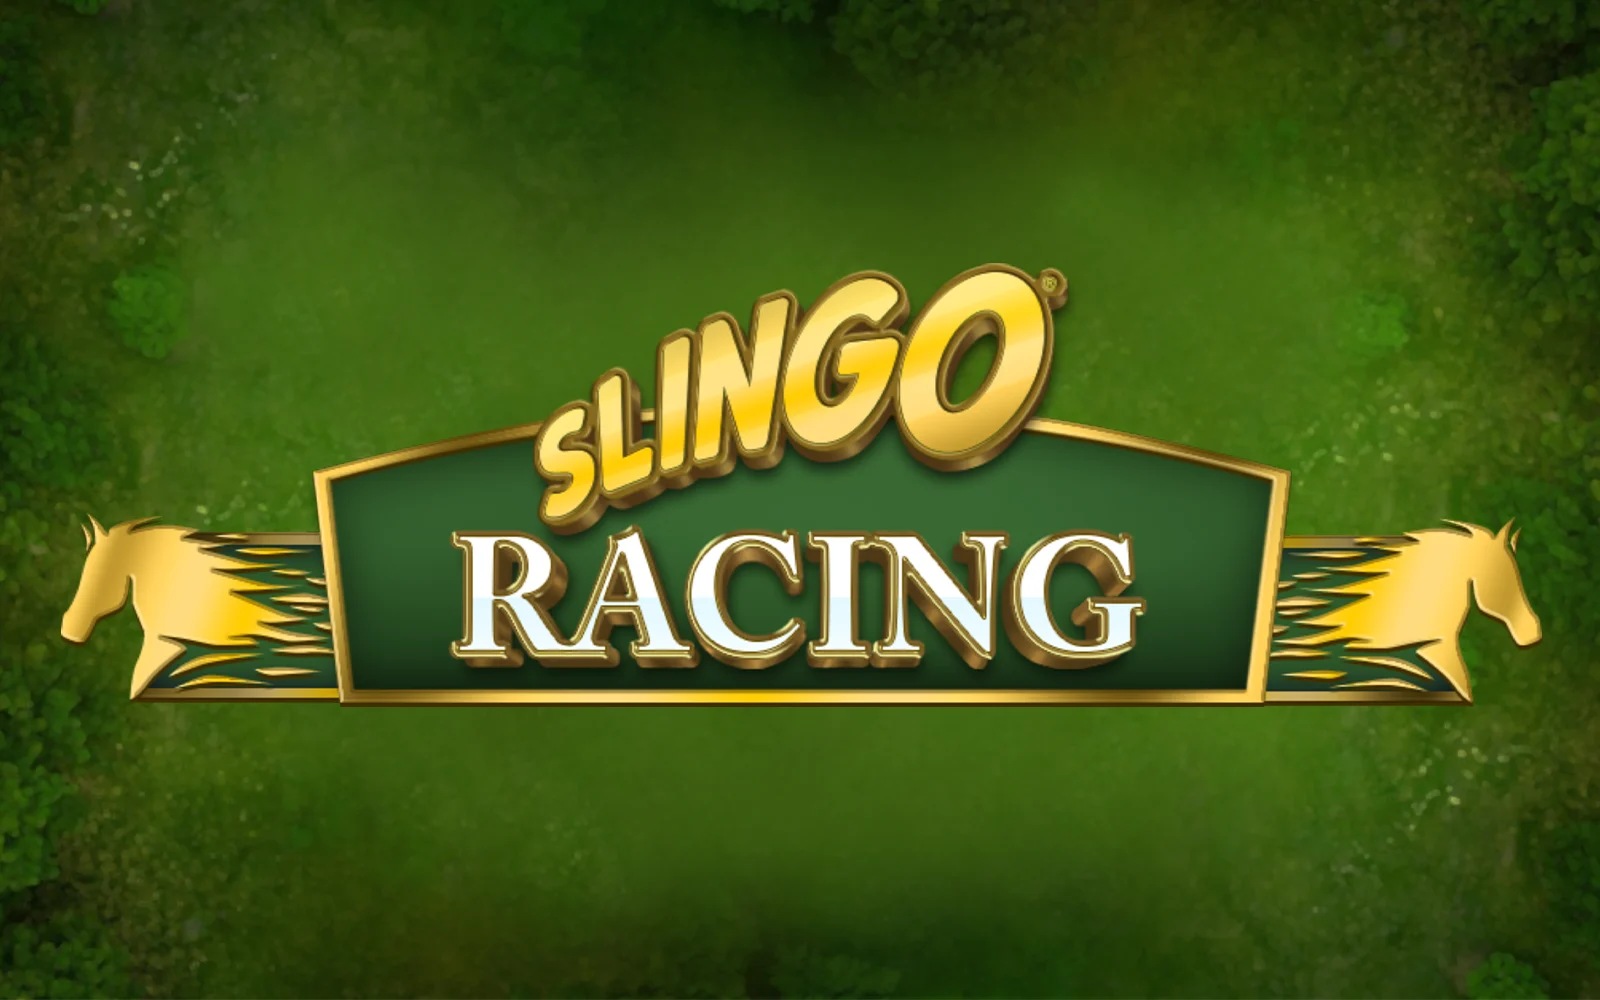 Gioca a Slingo Racing sul casino online Starcasino.be